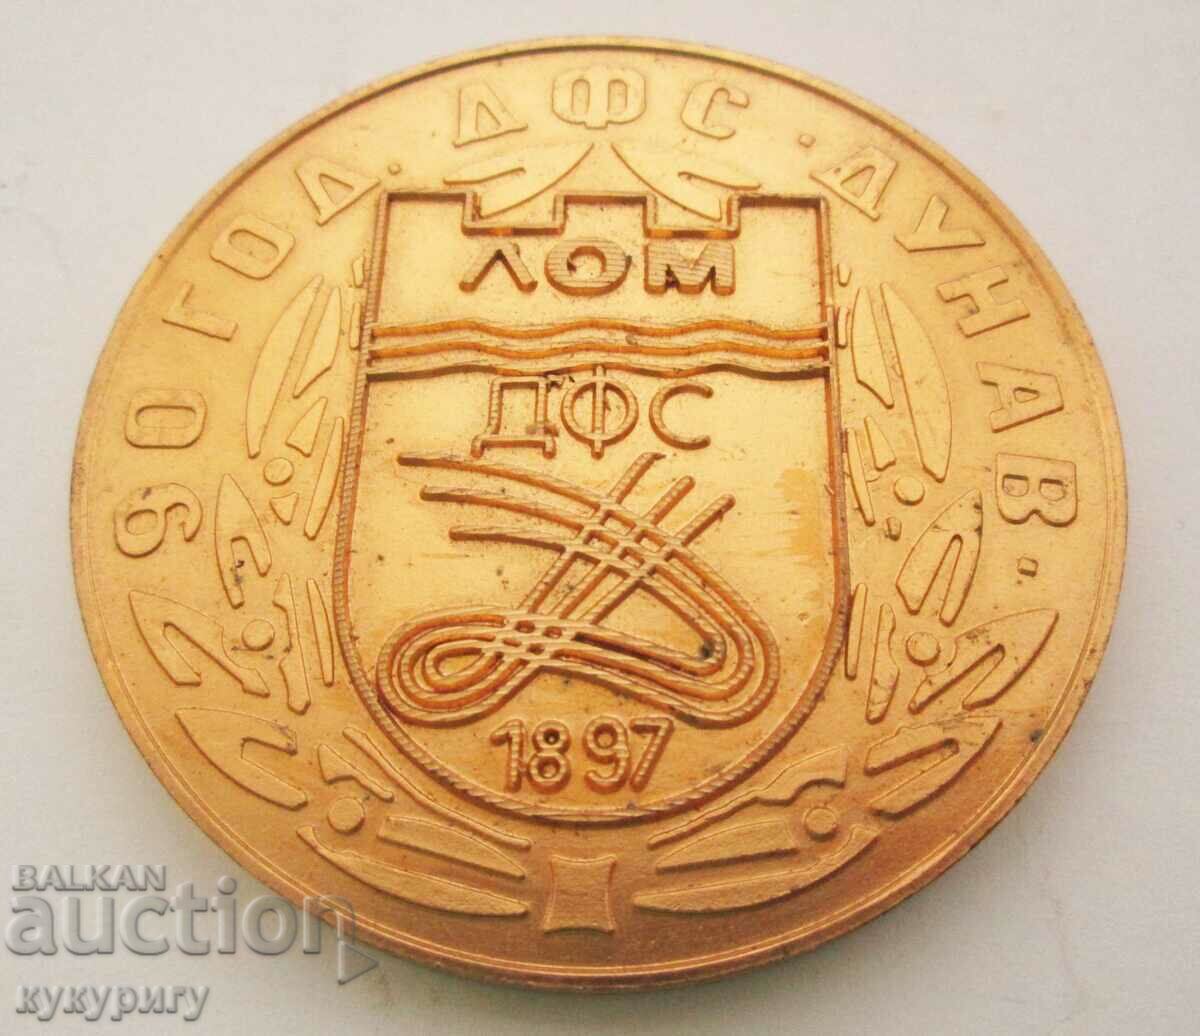 Star Sots medal plaque 90 DFS DANUV LOM 1897